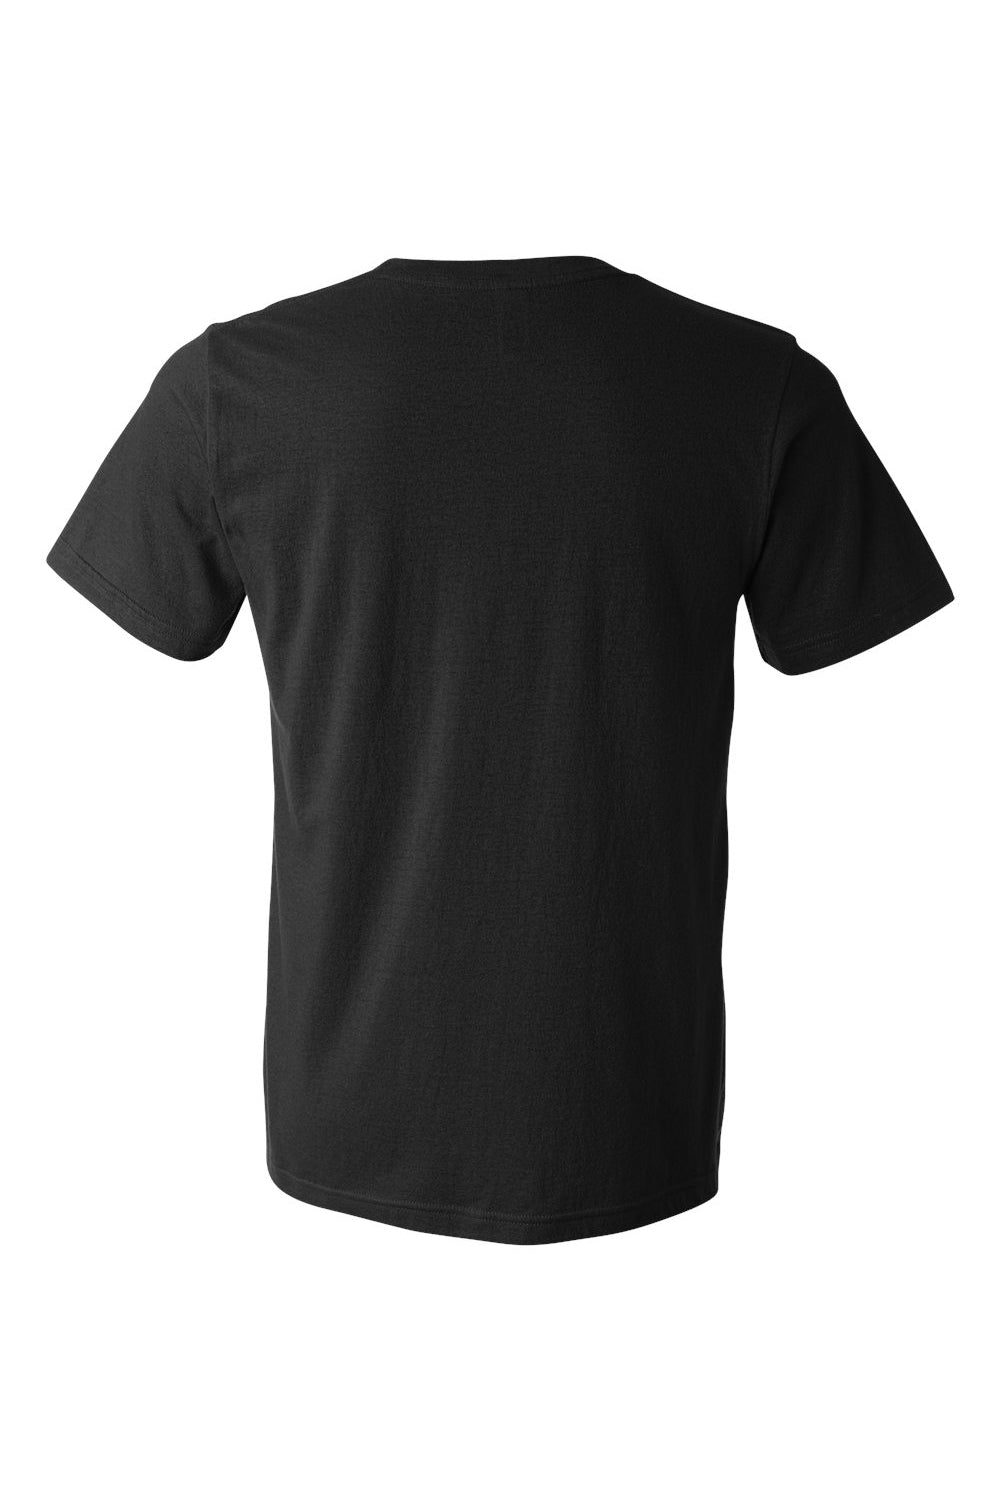 Bella + Canvas 3021 Mens Jersey Short Sleeve Crewneck T-Shirt w/ Pocket Black Flat Back